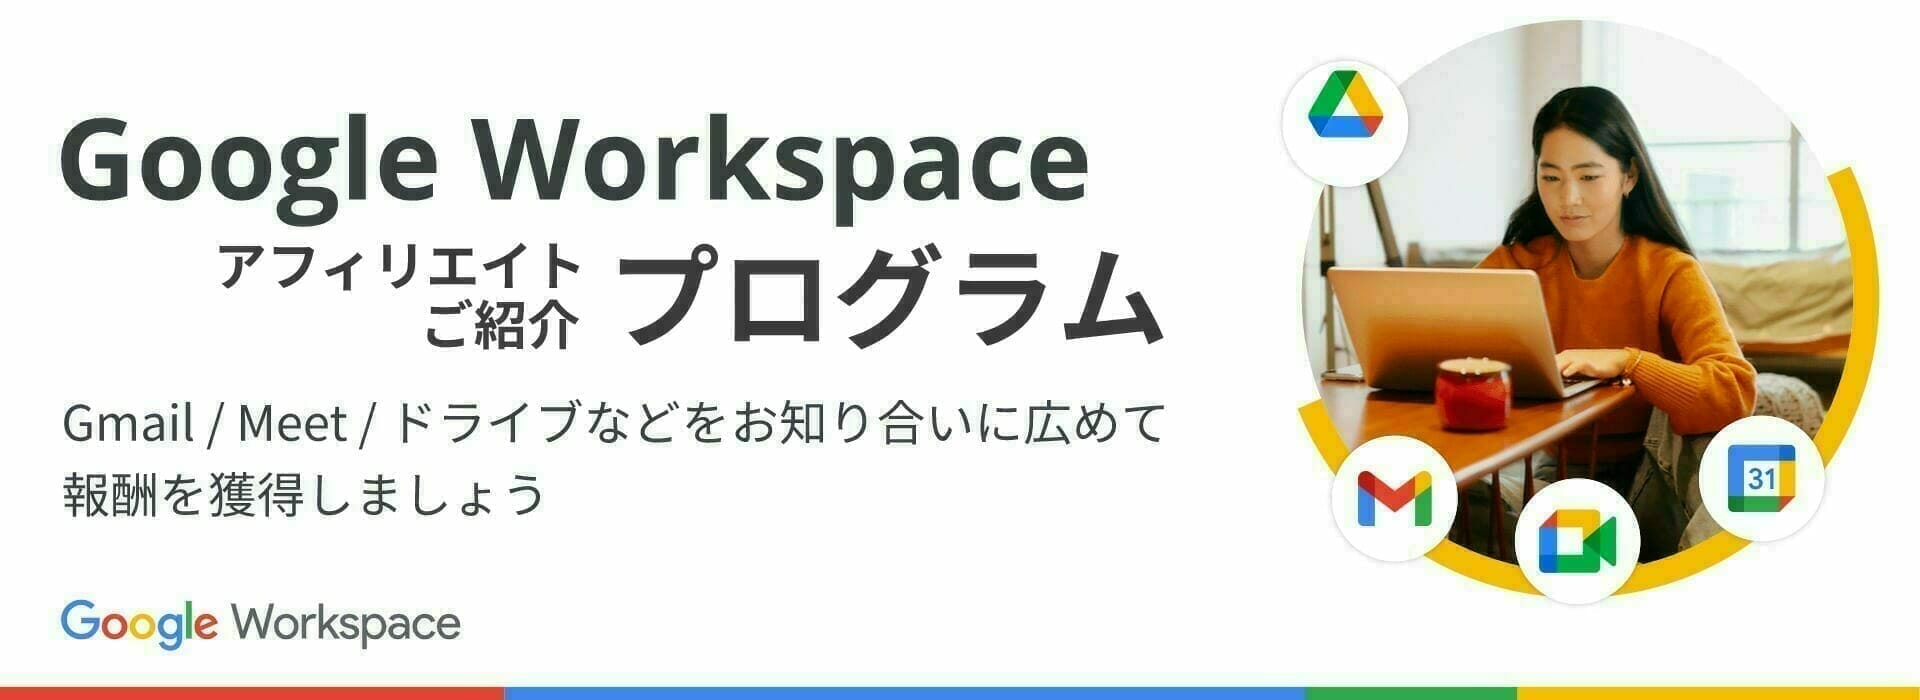 Google Workspace アフィリエイト/ご紹介プログラムについて